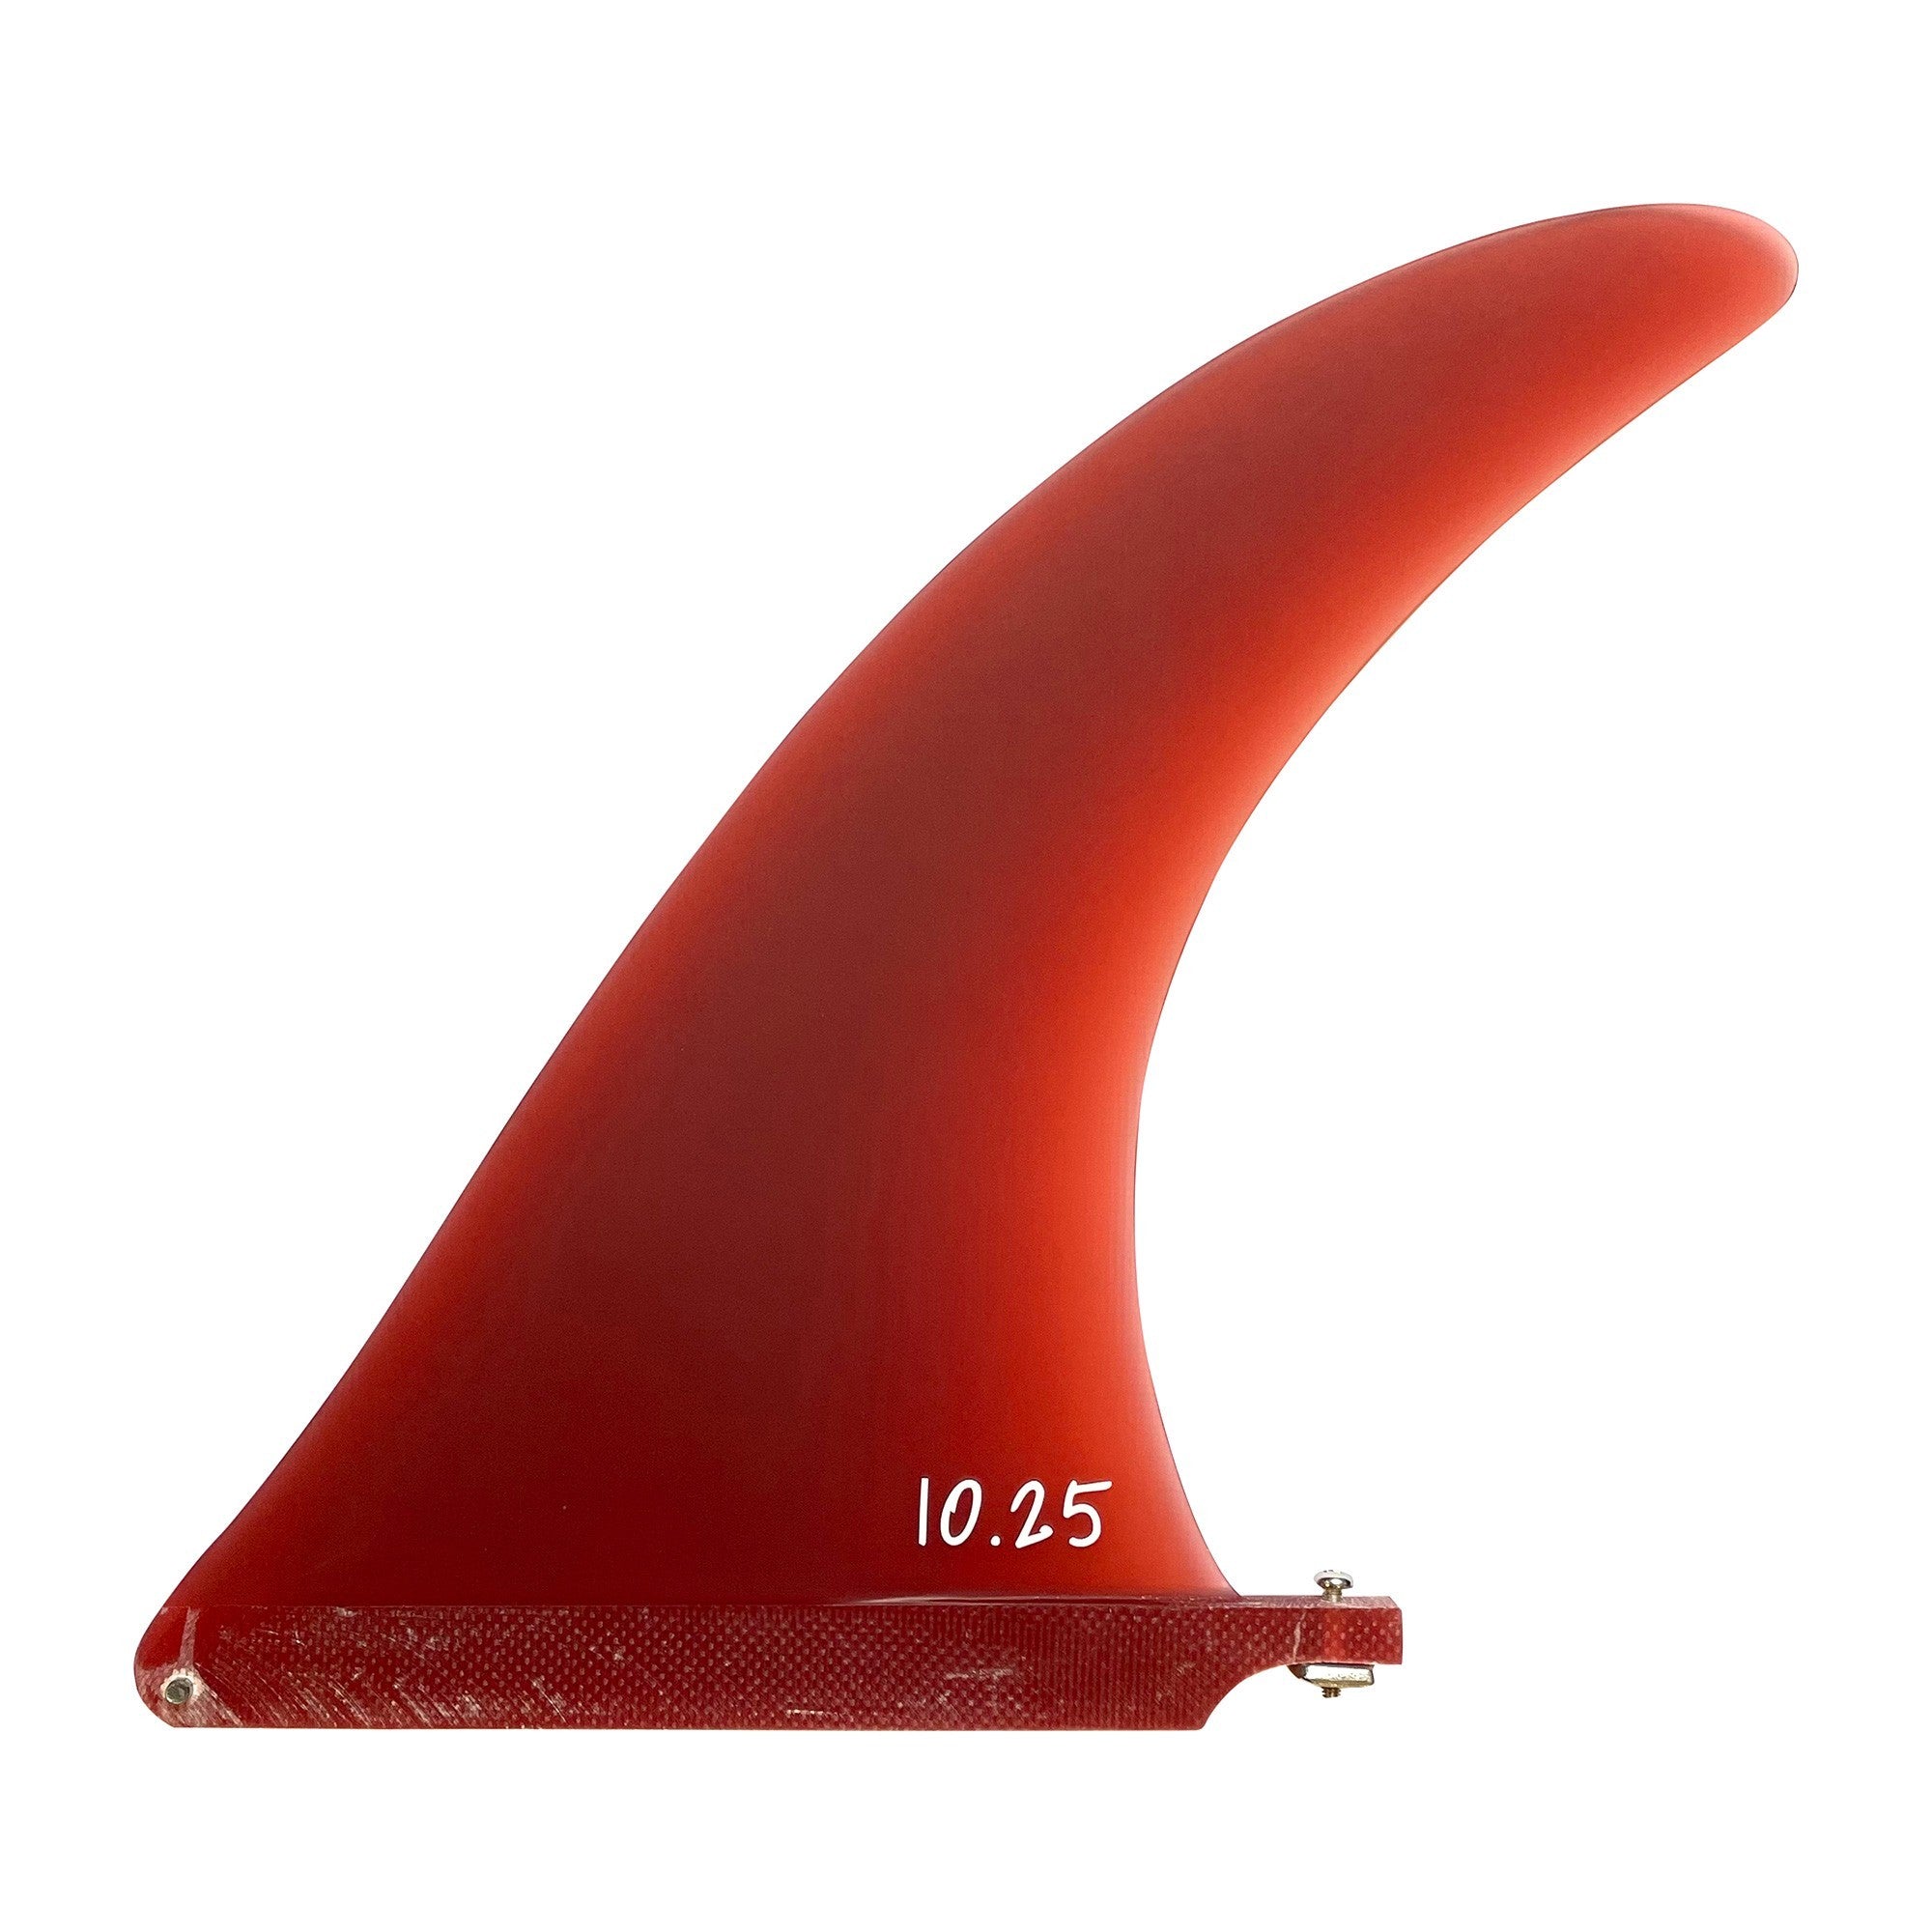 SISTEMA DE SURF - Aleta única de fibra de vidrio Dolphin (caja de EE. UU.) - 9" - Rojo